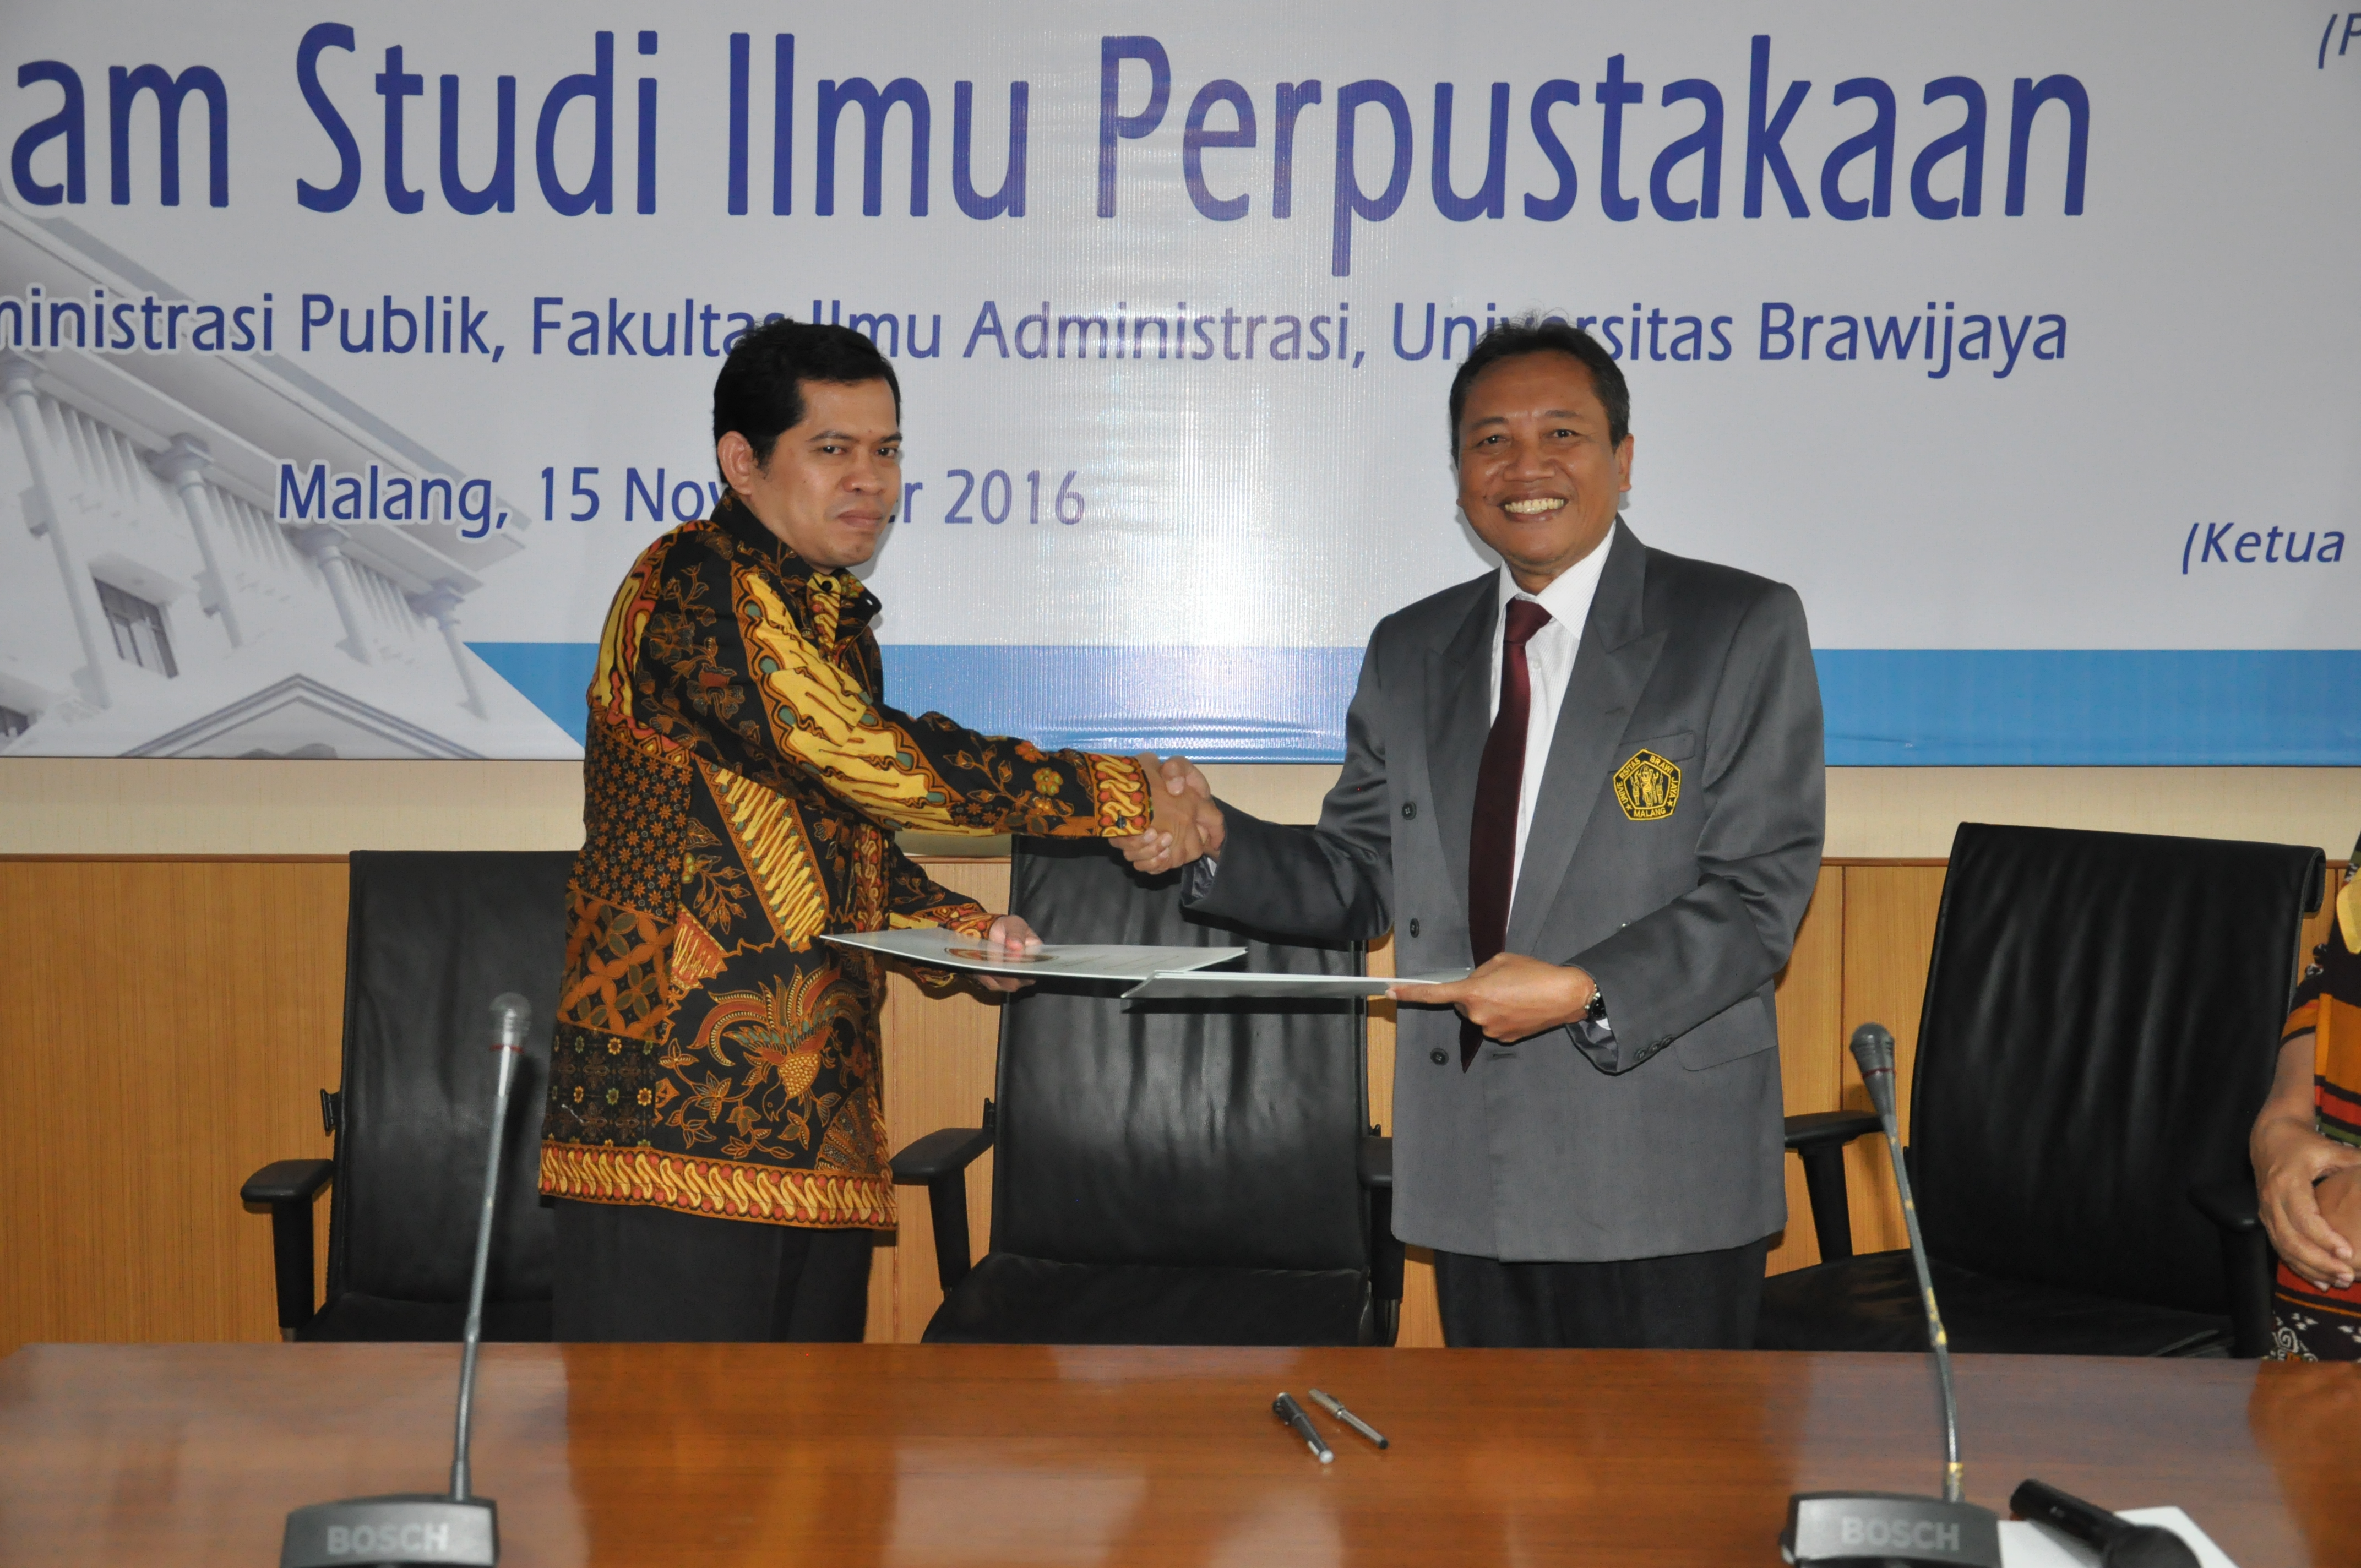 Dekan FIA UB Prof. Dr. Bambang Supriyono, MS Usai Menandatangani Nota Kesepahaman Dengan Farli Elnumeri, Ketua Umum Ikatan Sarjana Ilmu Perpustakaan Dan Informasi